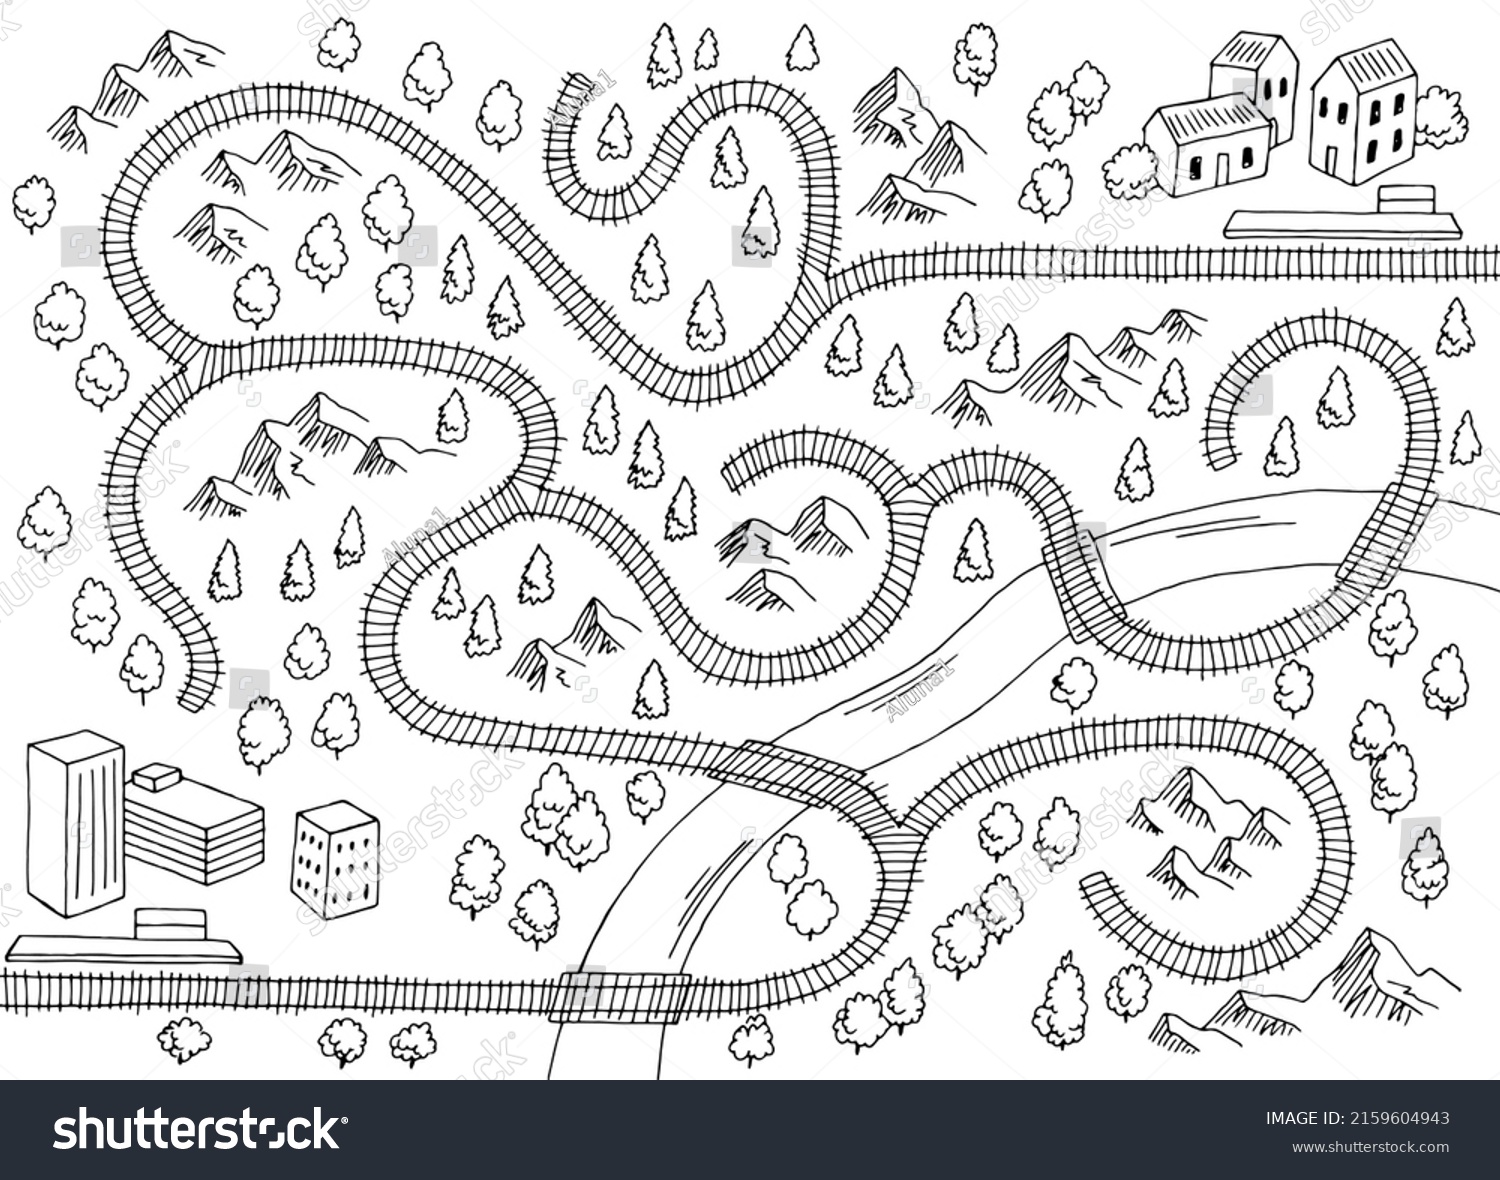 Railroad Maze Graphic Black White Sketch Stock Vector (Royalty Free ...